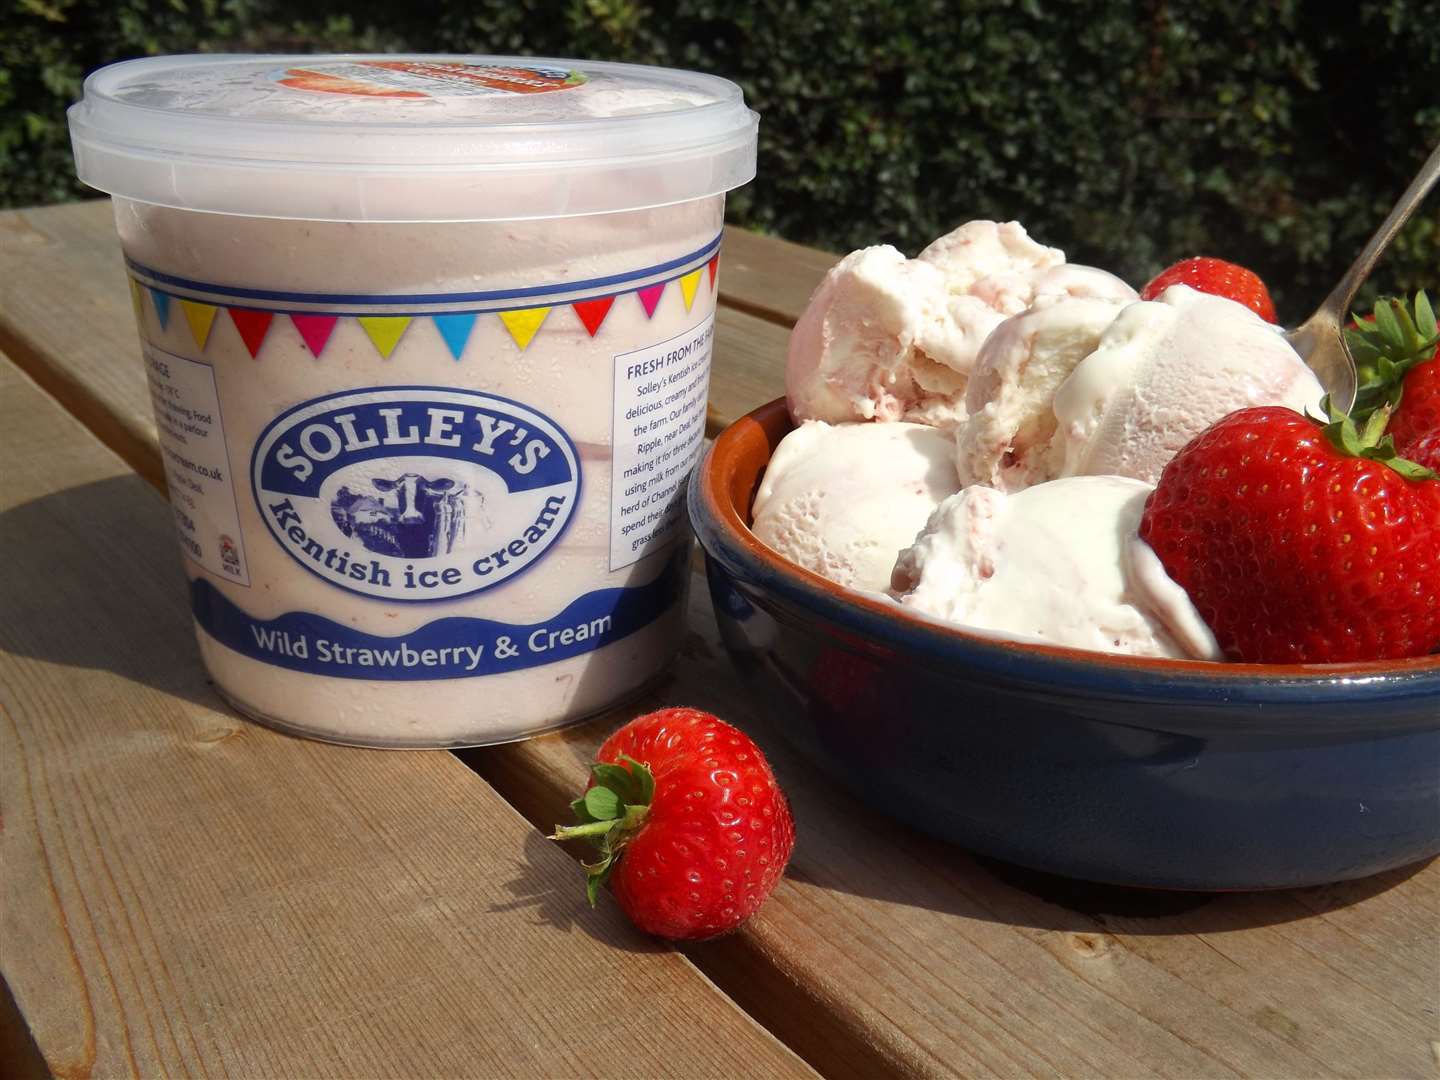 Enjoy a Solley's ice cream this Sunday